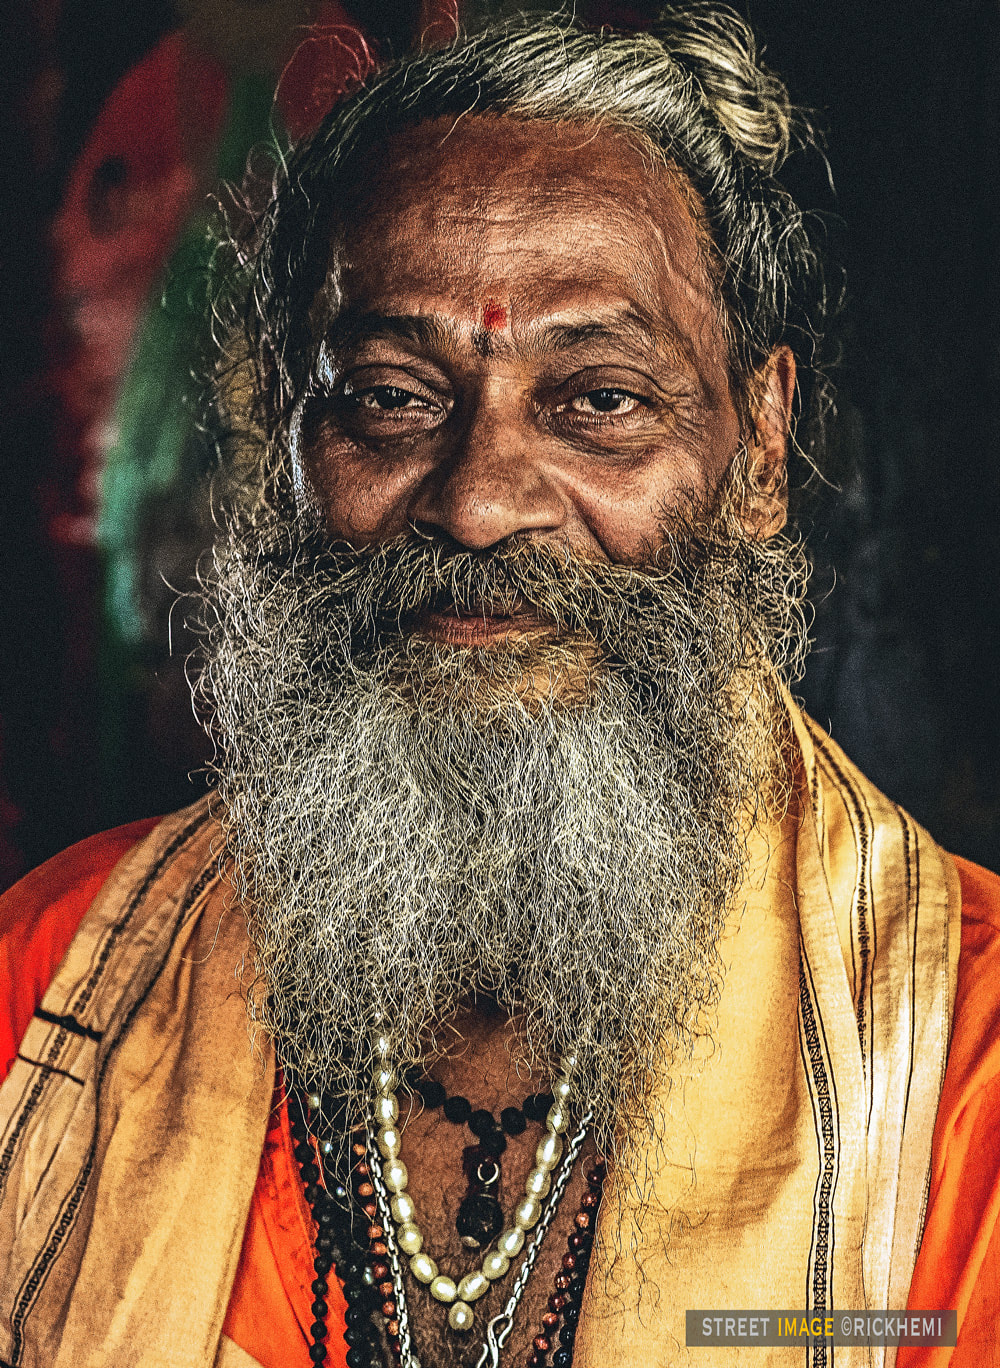 solo travel India, street portrait India, image by Rick Hemi